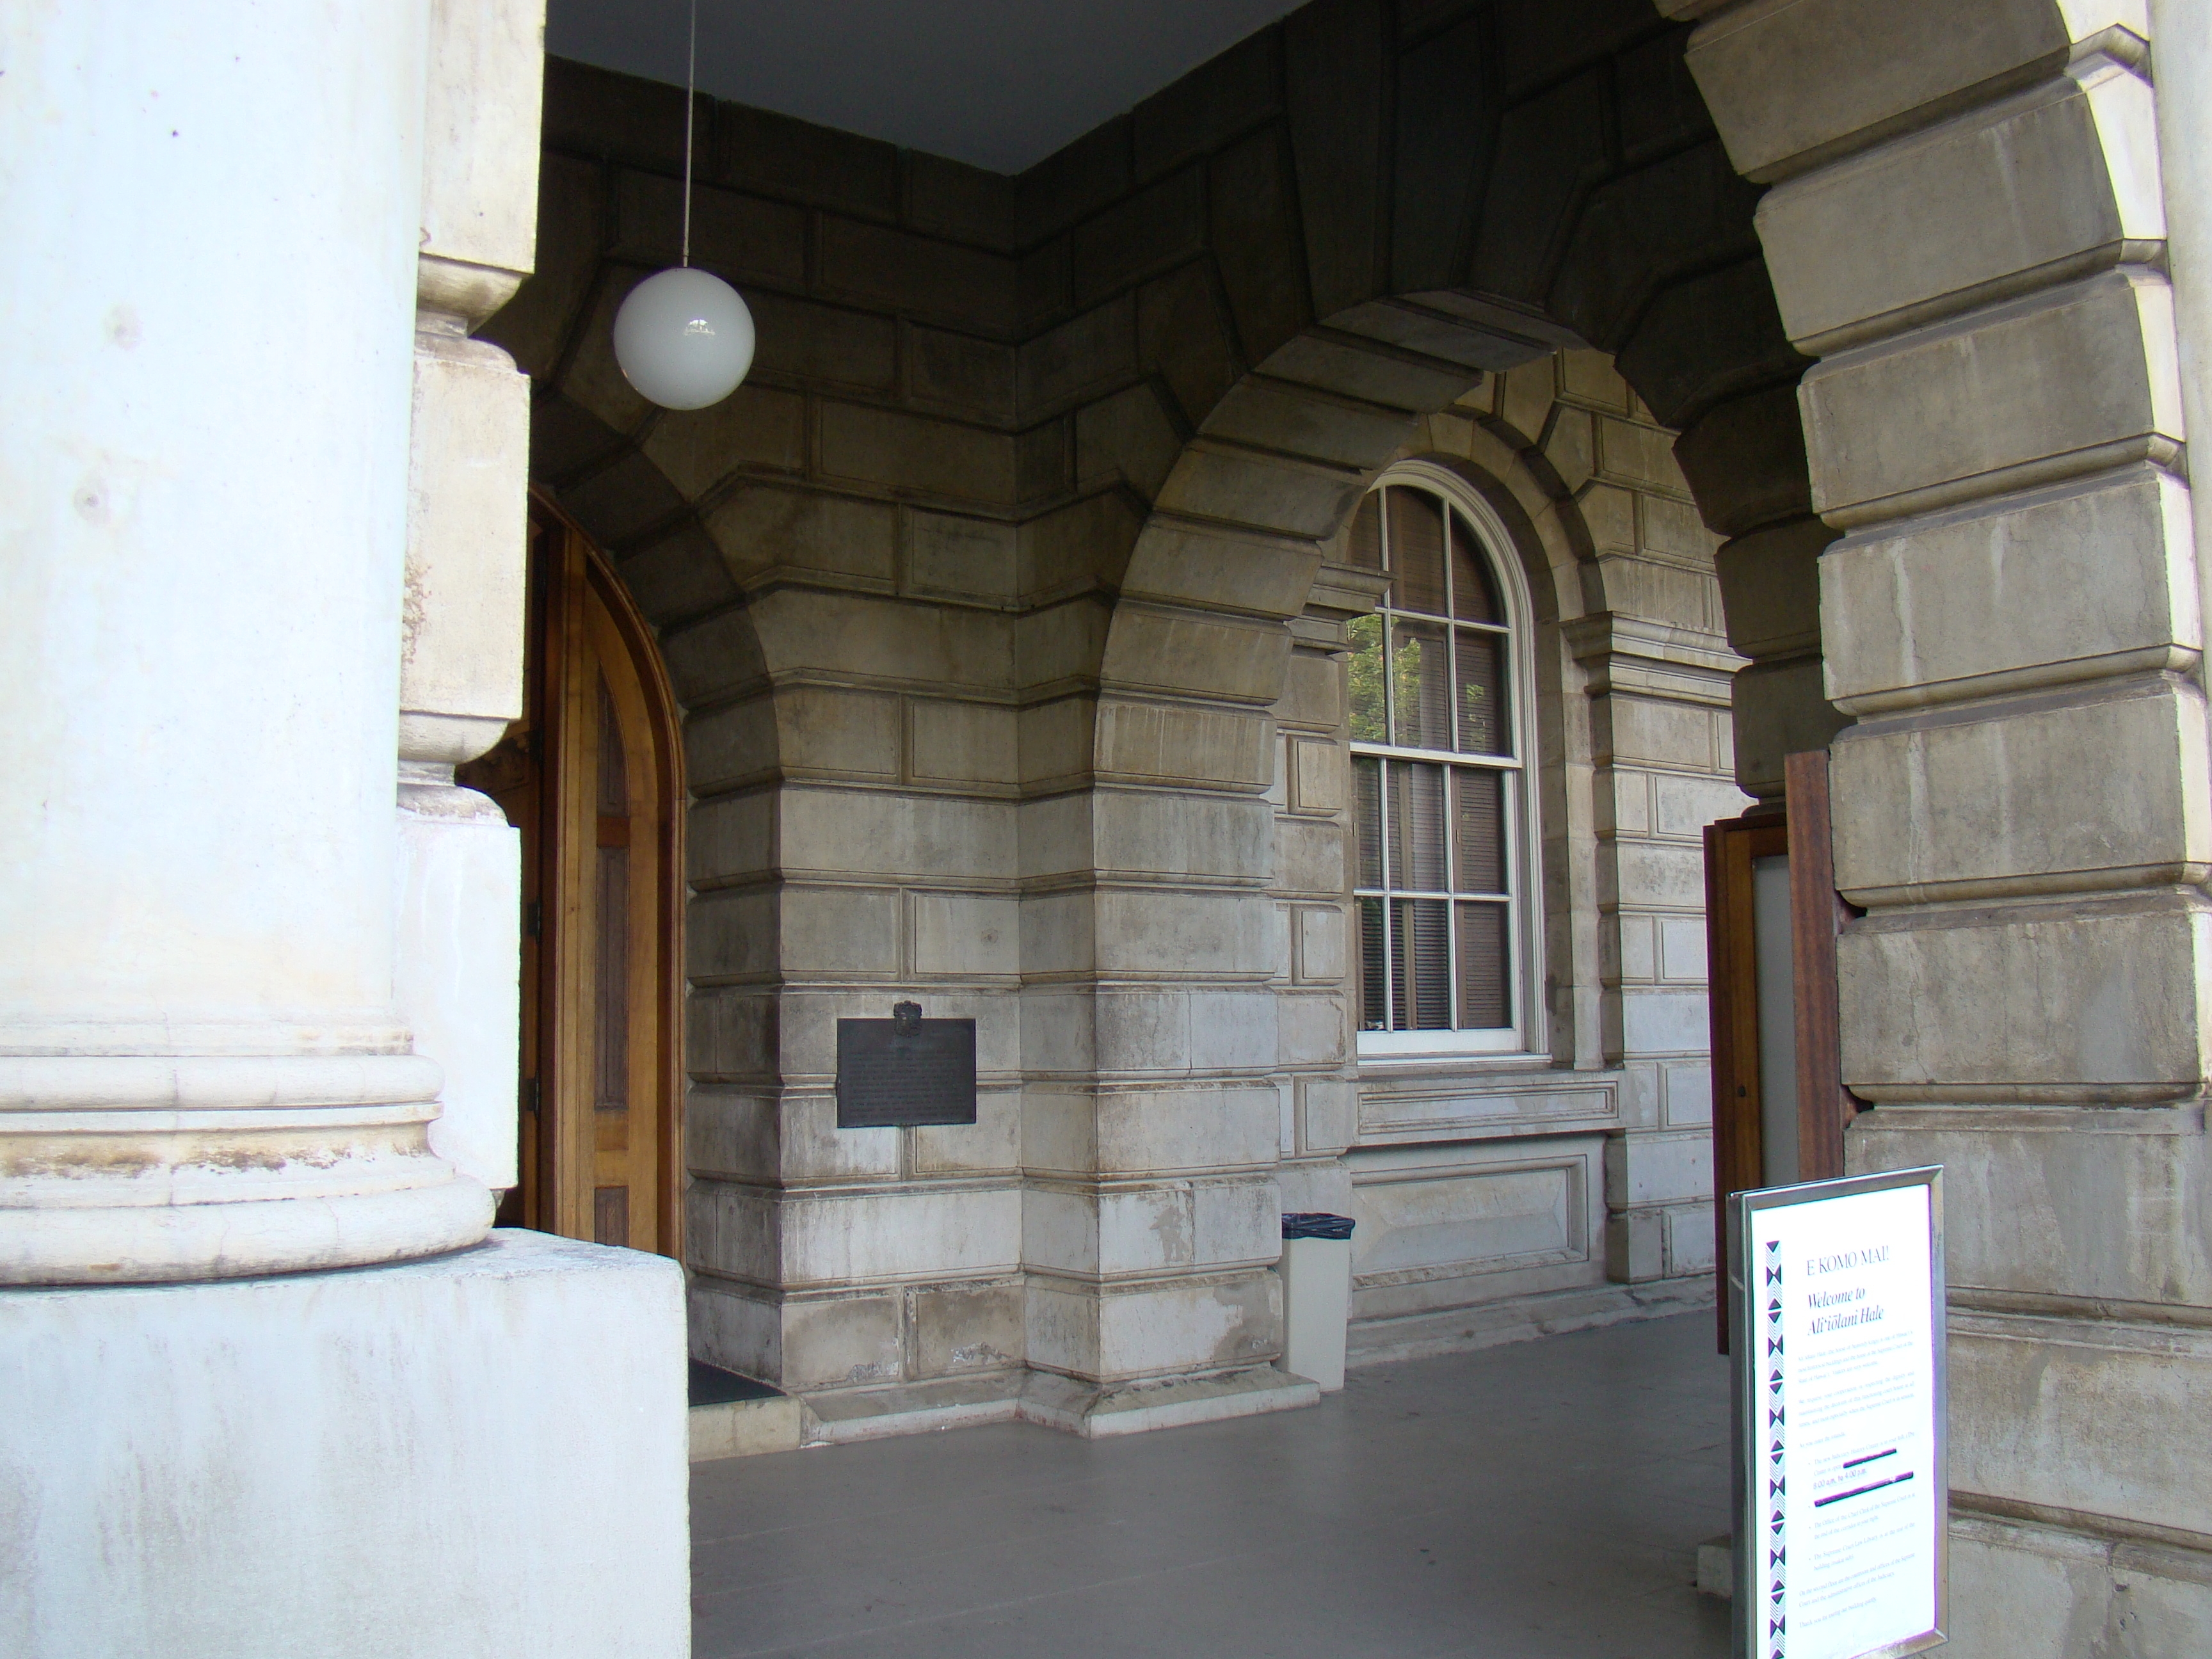 Aliiolani Hale Historic Marker at Building Entrance